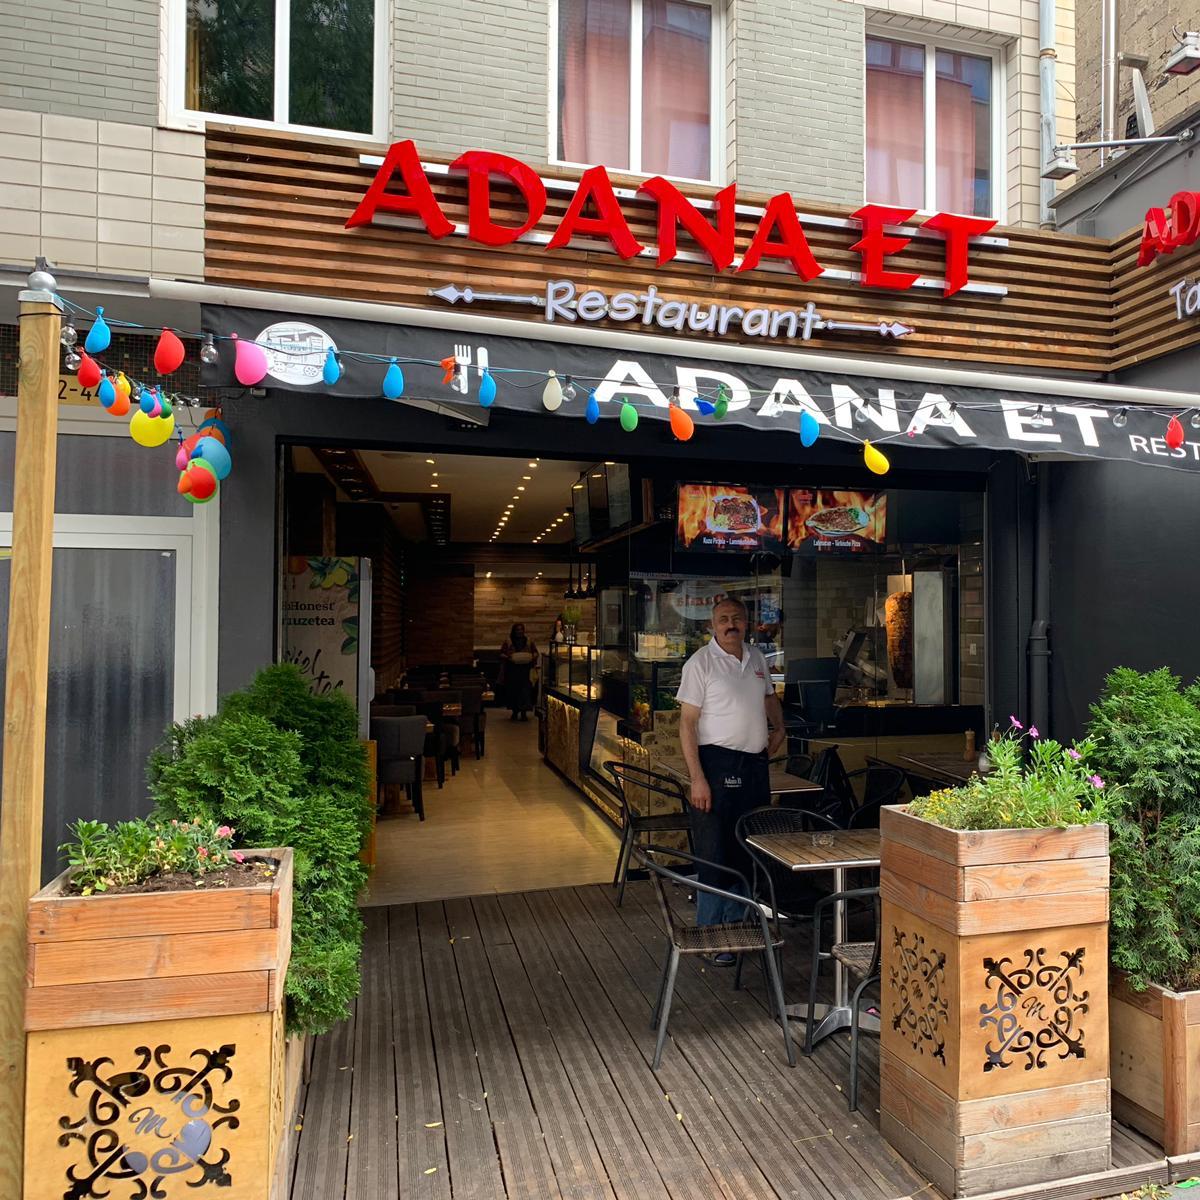 Restaurant "Adana Et Restaurant" in Köln